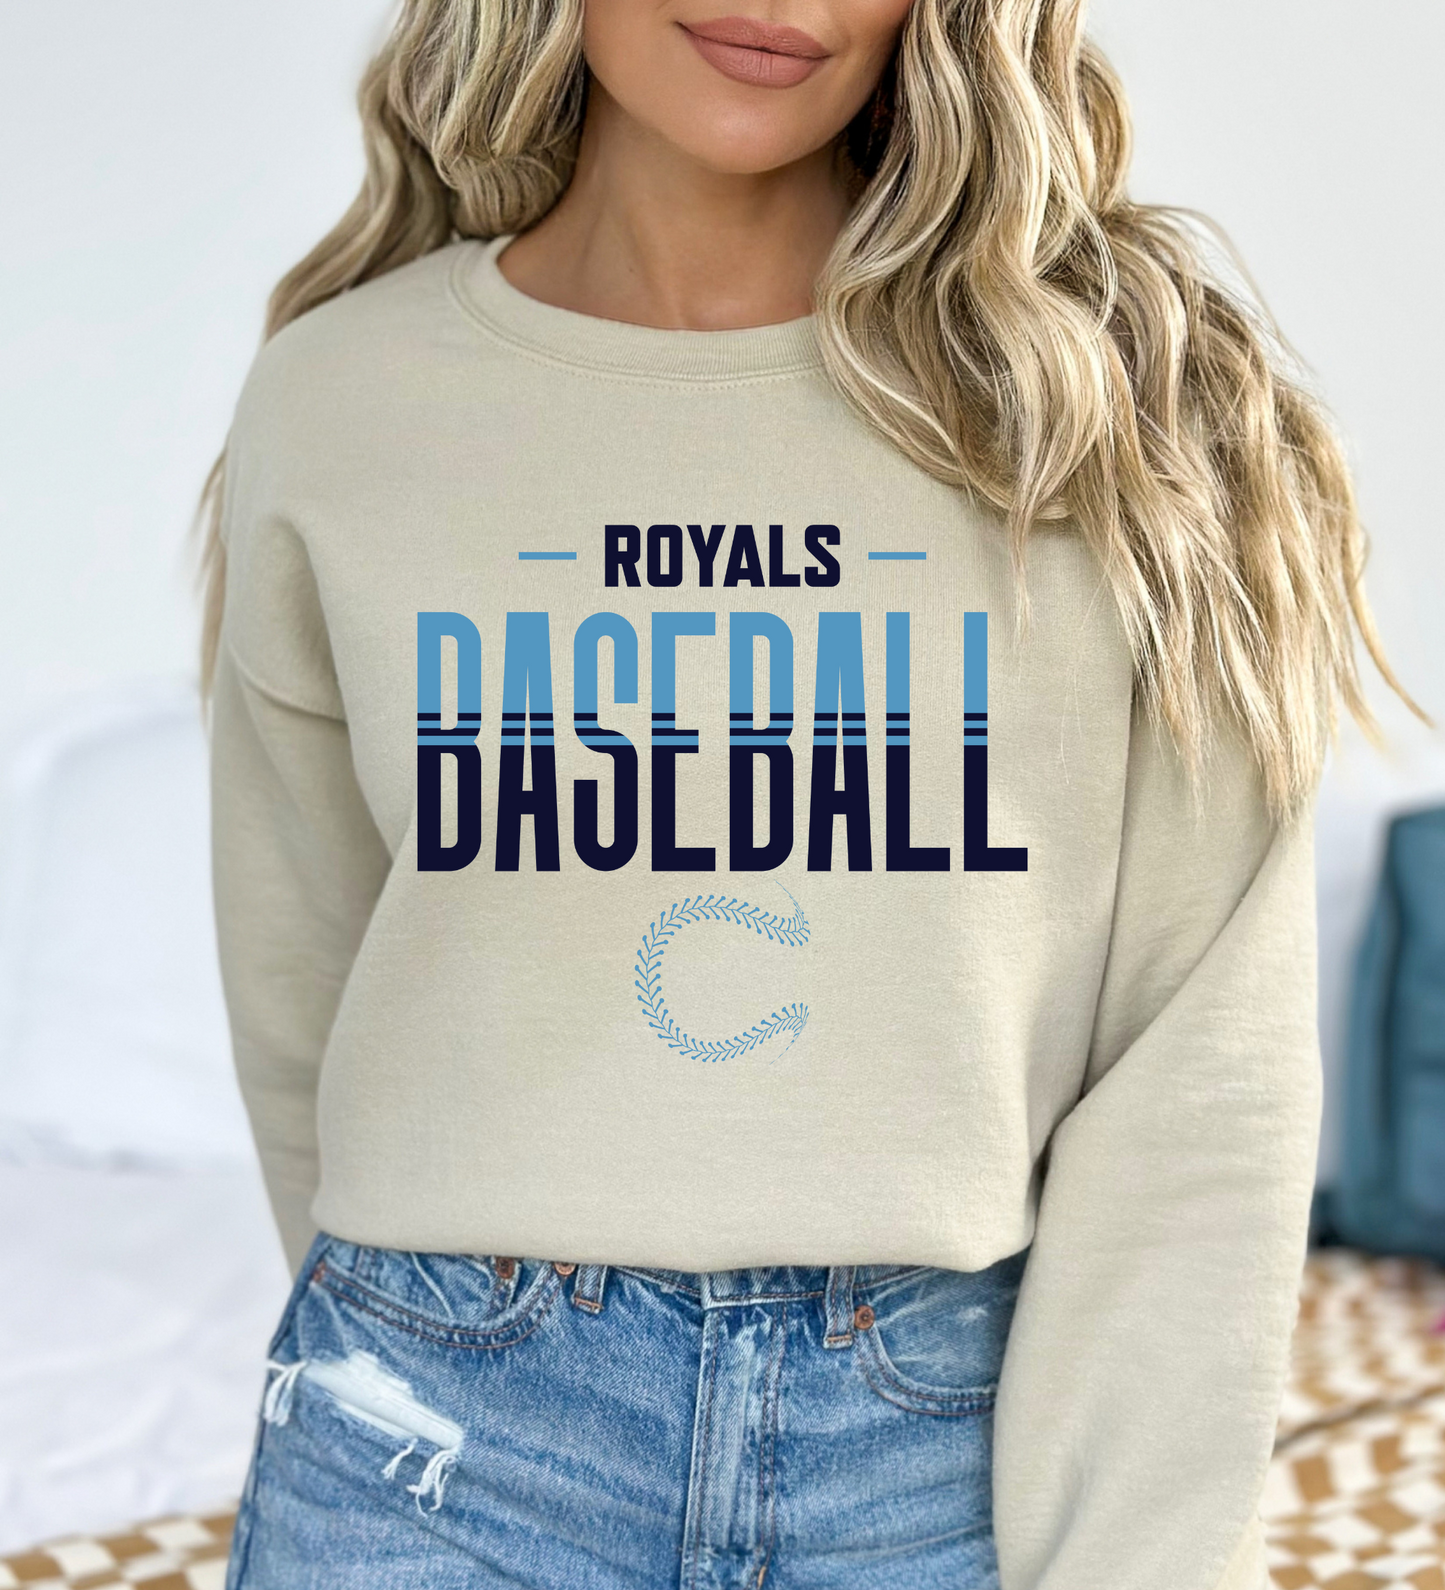 Royals Baseball Double (Gildan)